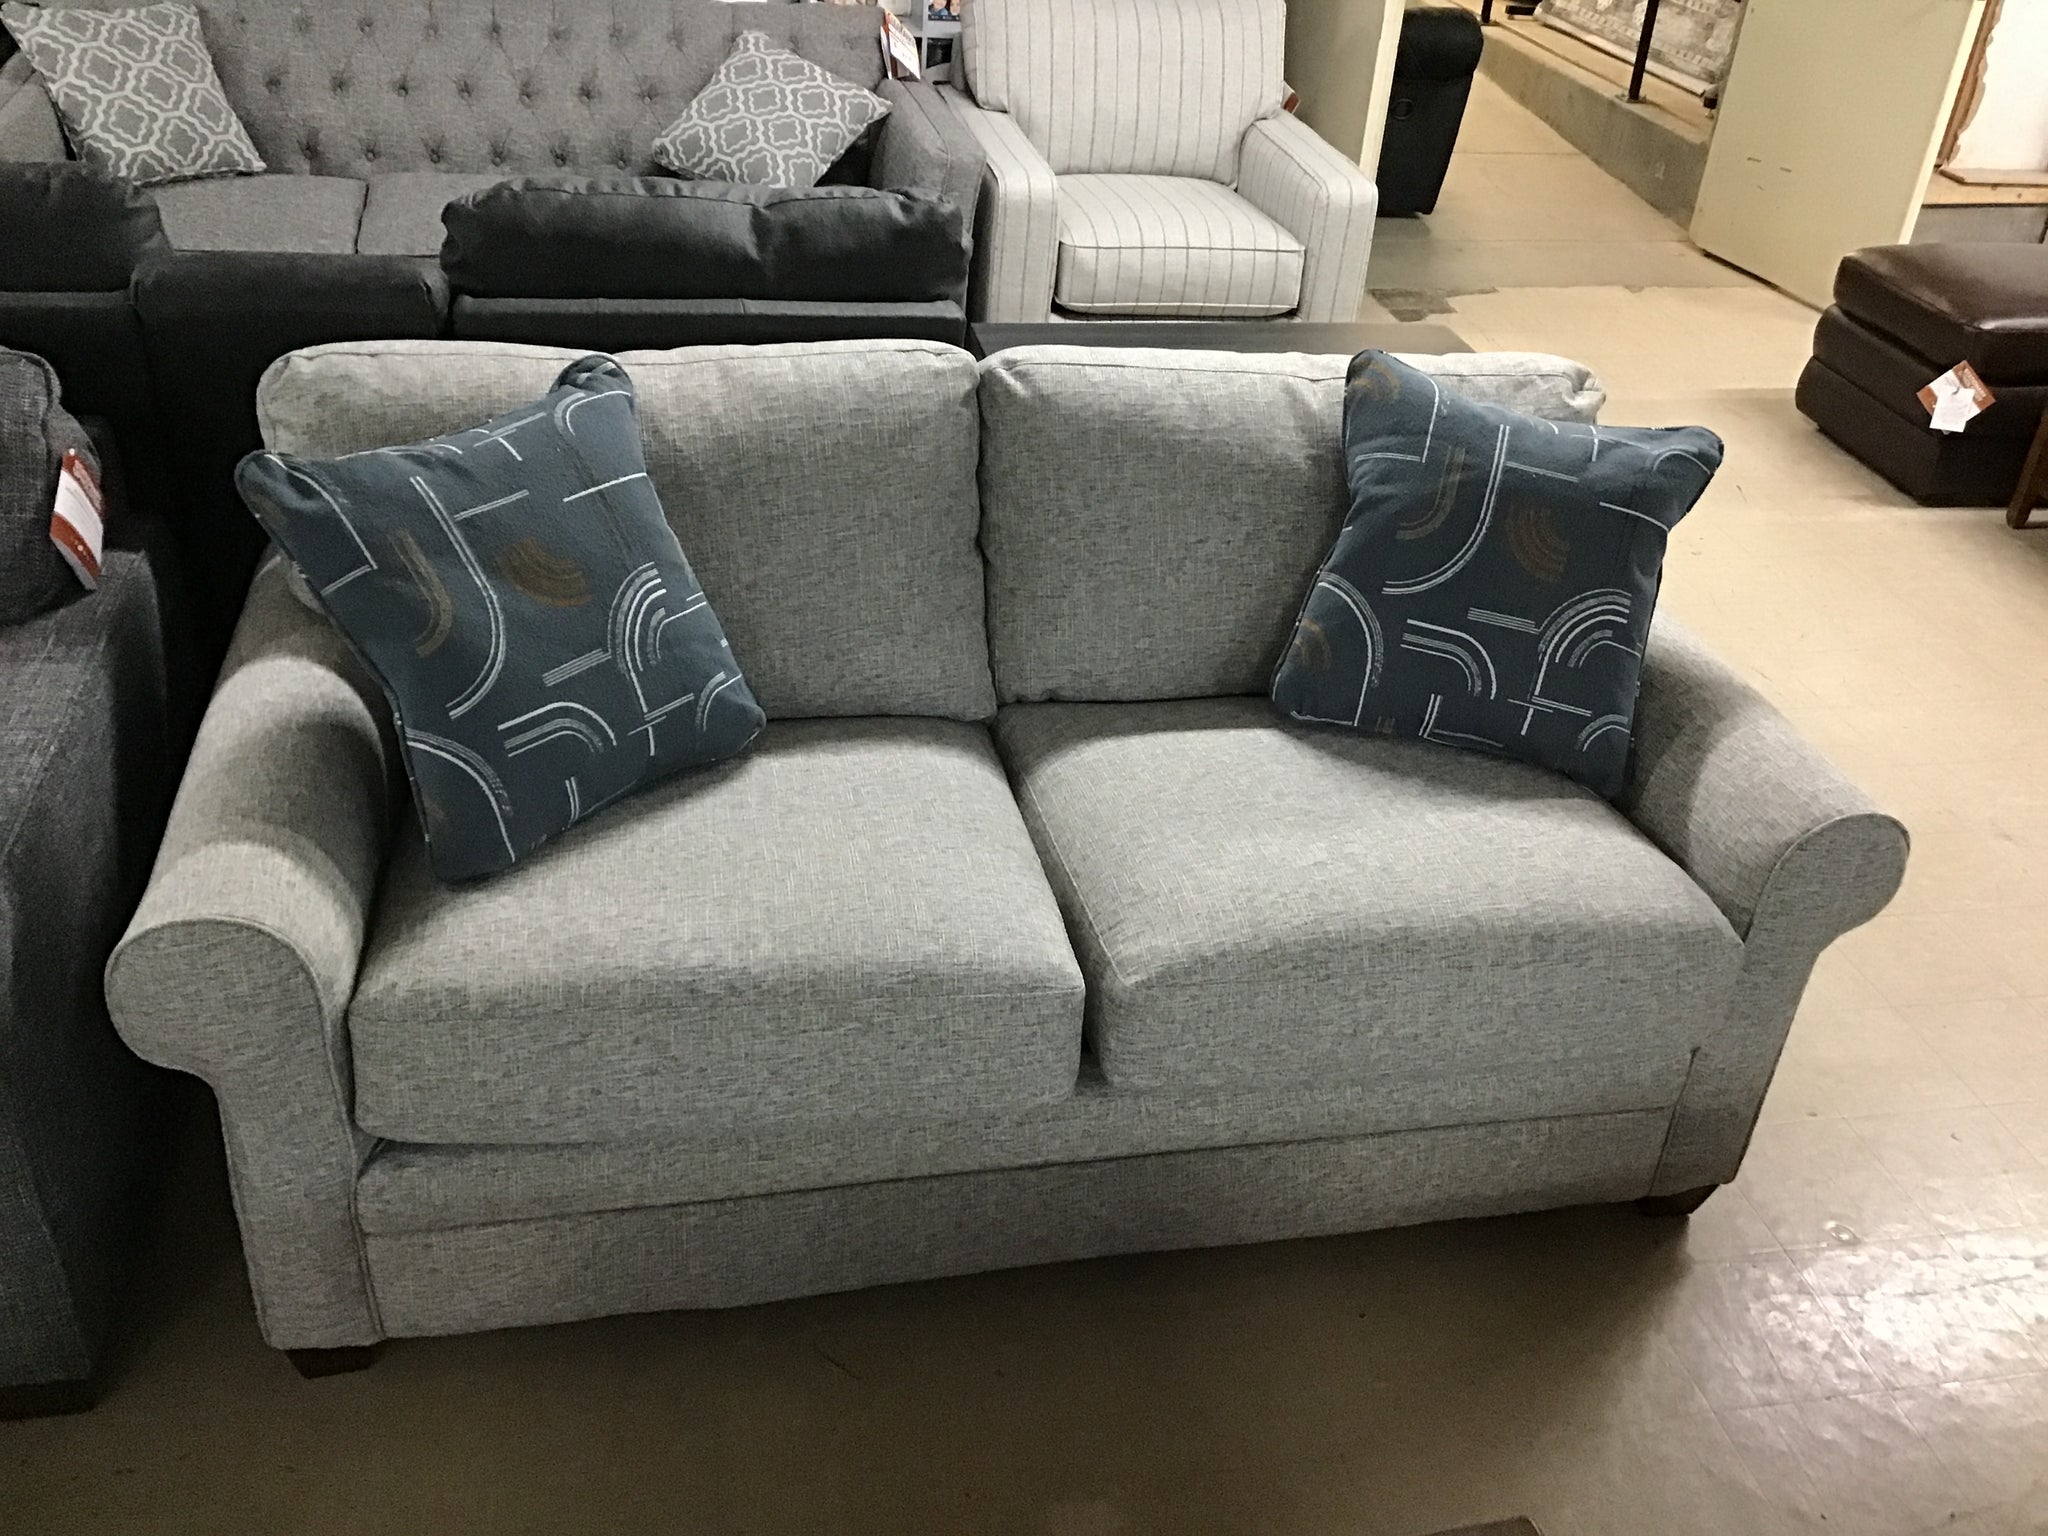 Olson Full Sleeper Sofa By La Z Boy Furniture 520 613 D197052 Coen S Home Furnishings